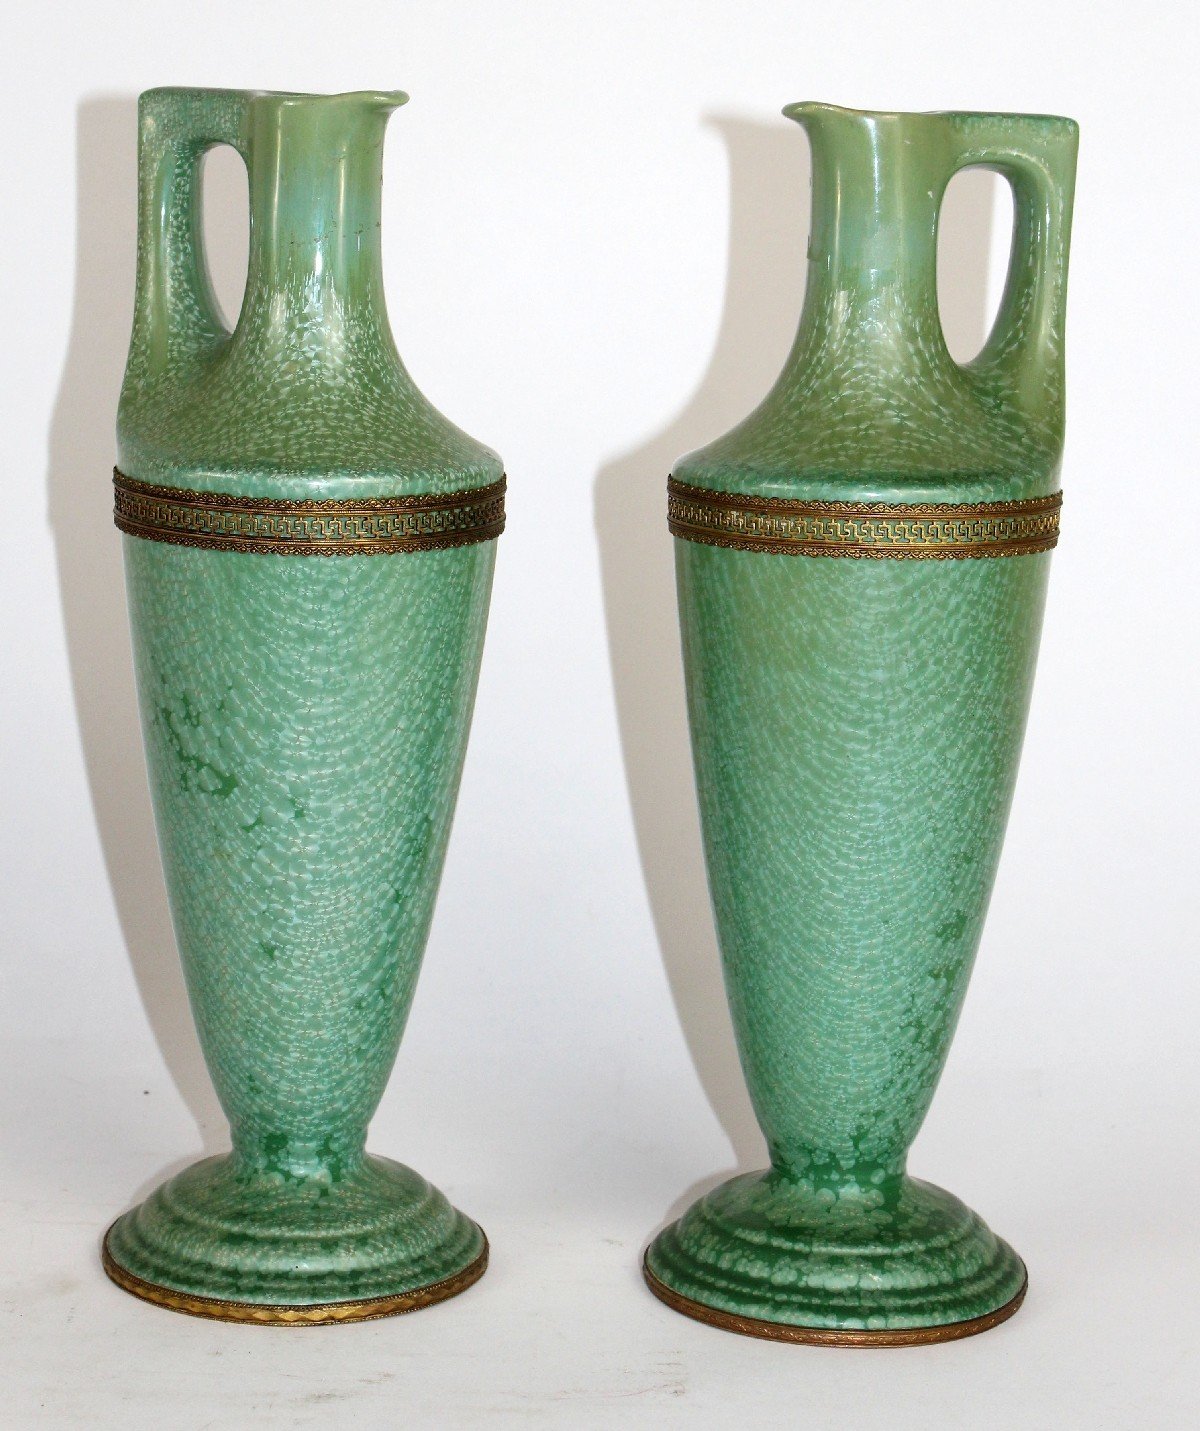 French Art Deco pottery vases